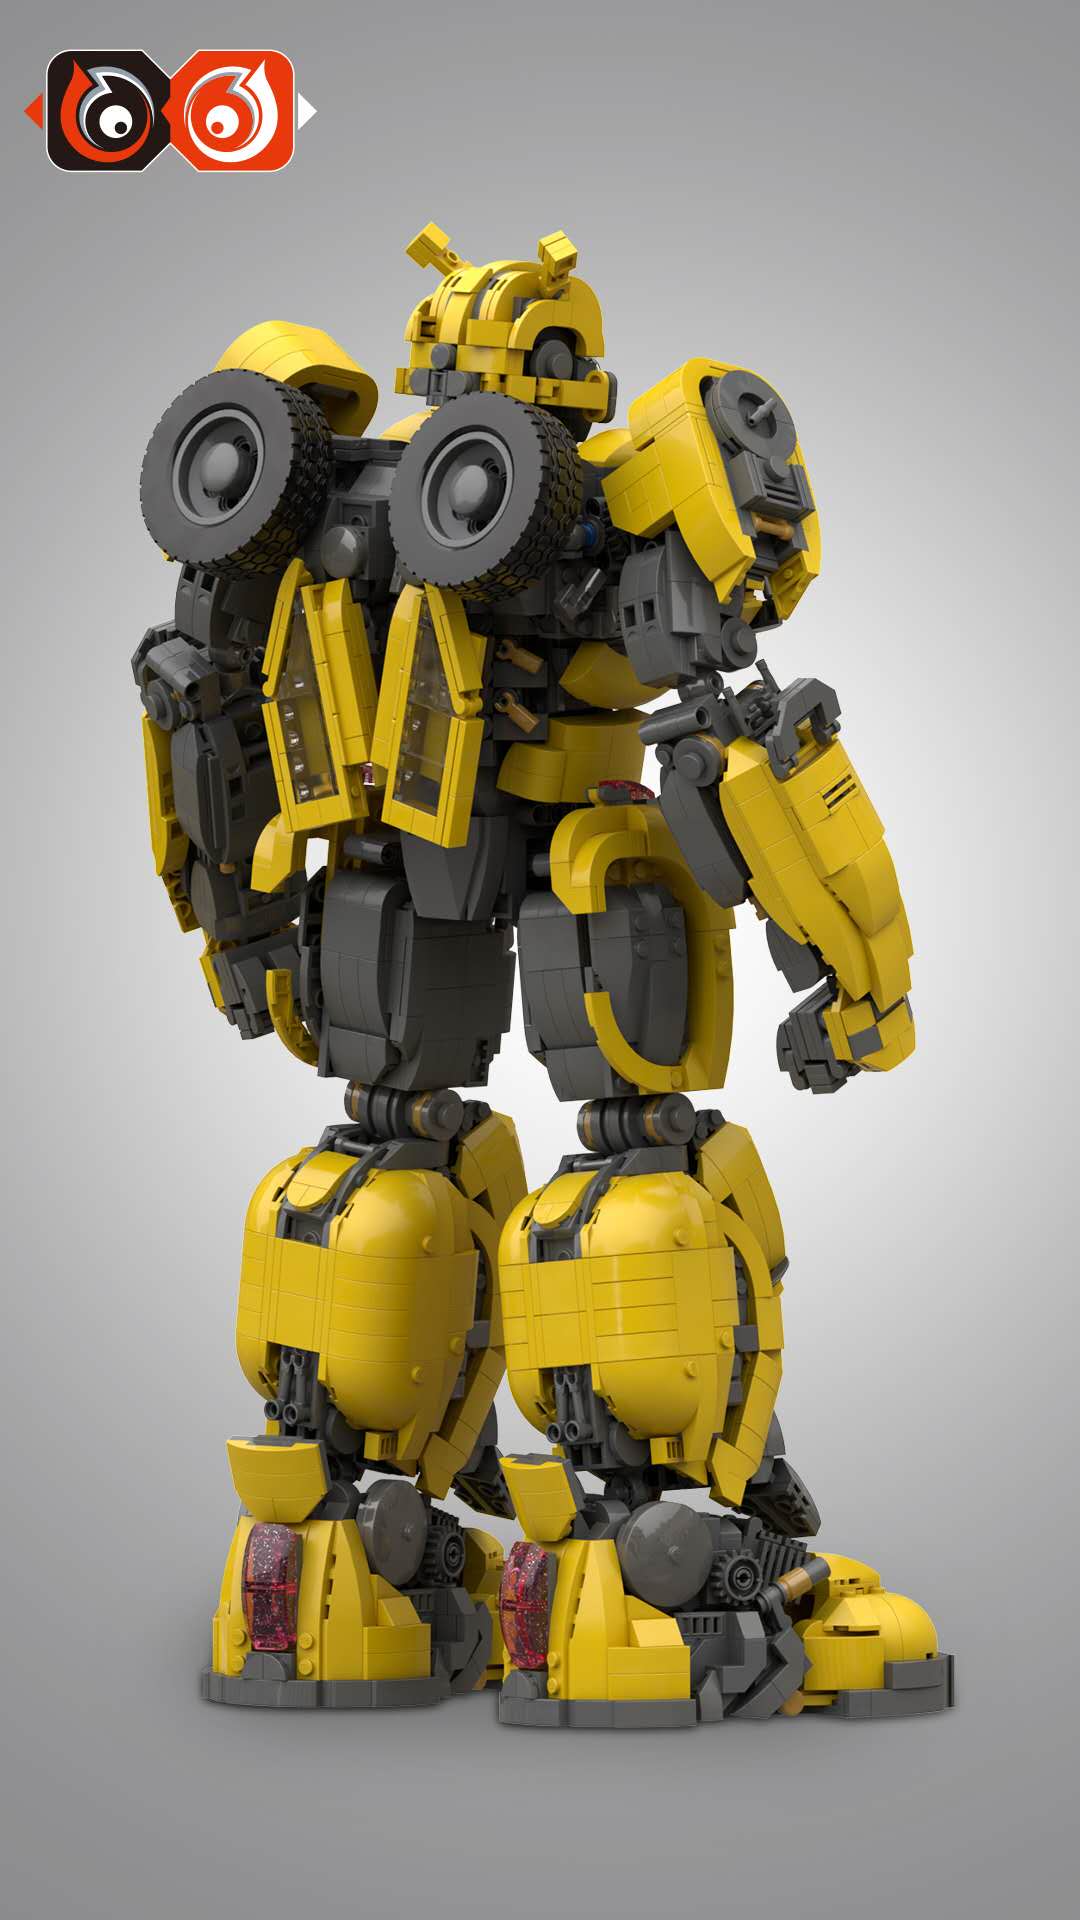 66 663 bumblebee verion 2018 transformer robot 1528 - MOULD KING